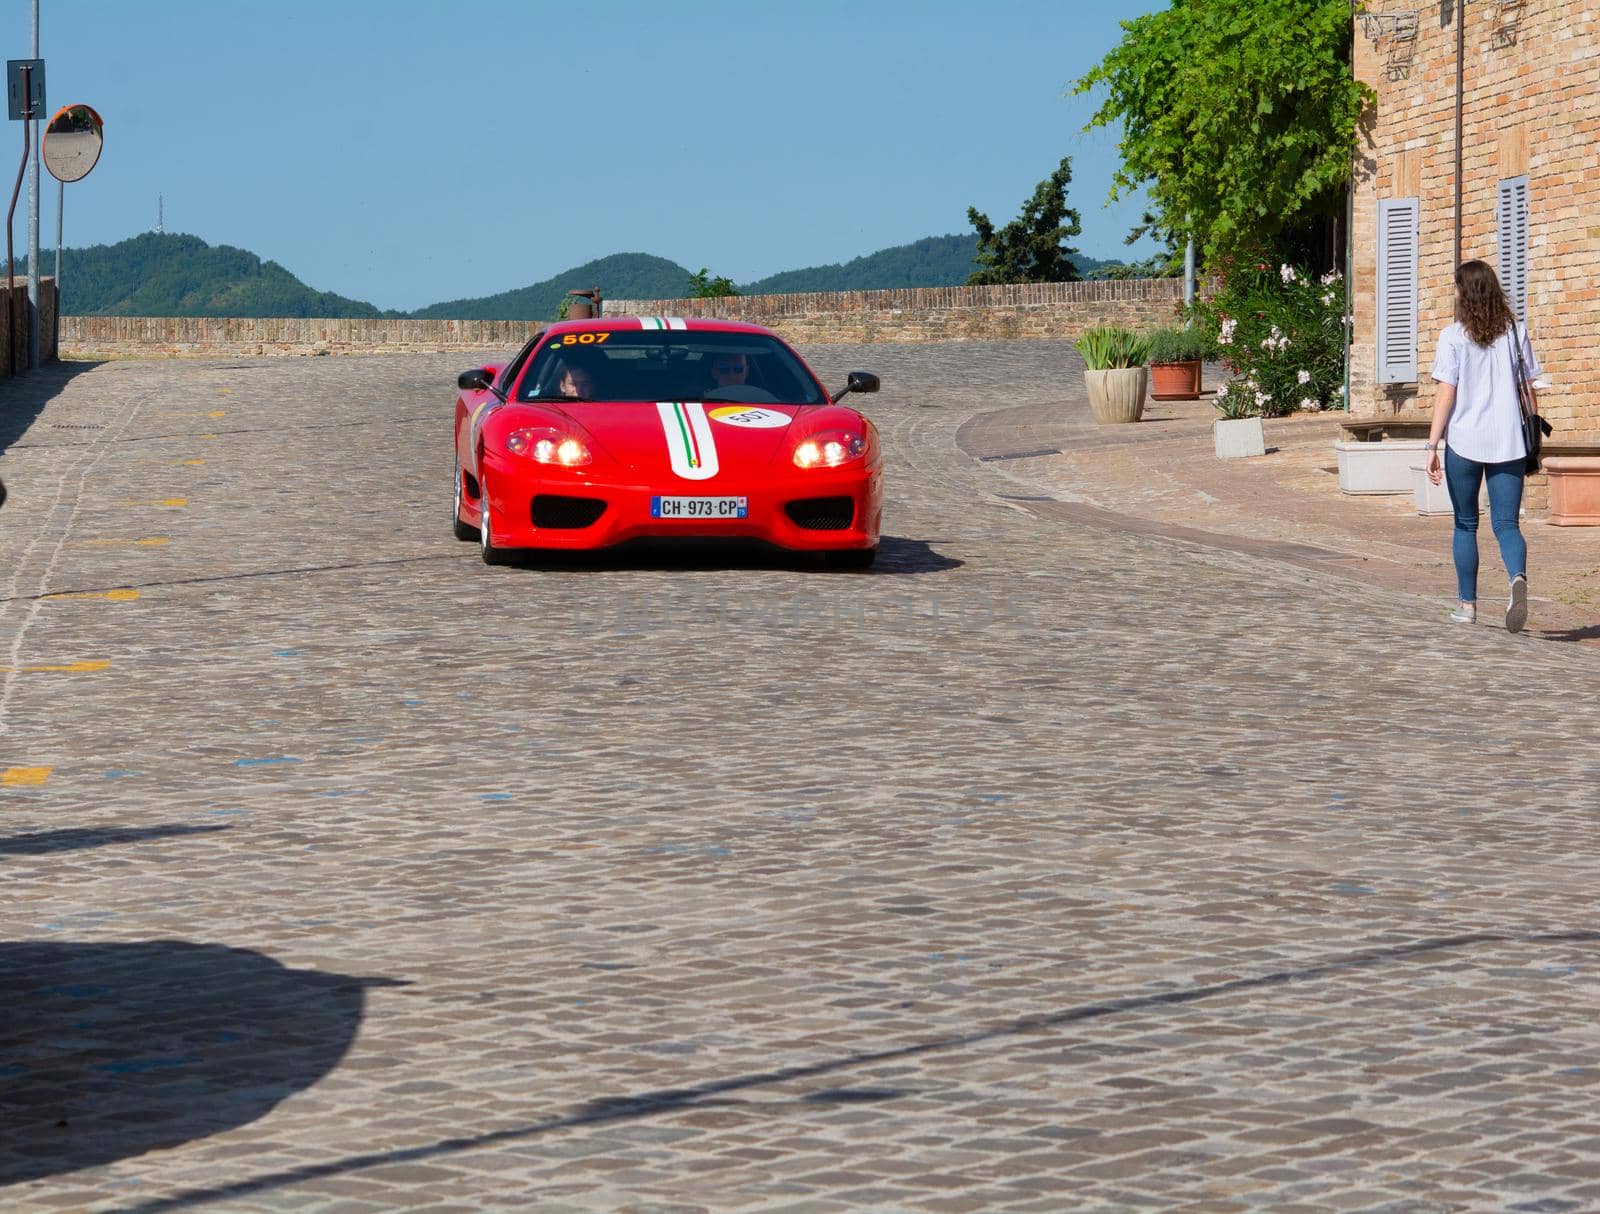 FERRARI TRIBUTE Ferrari MODENA IN an old racing car in rally Mille Miglia 2022 by massimocampanari